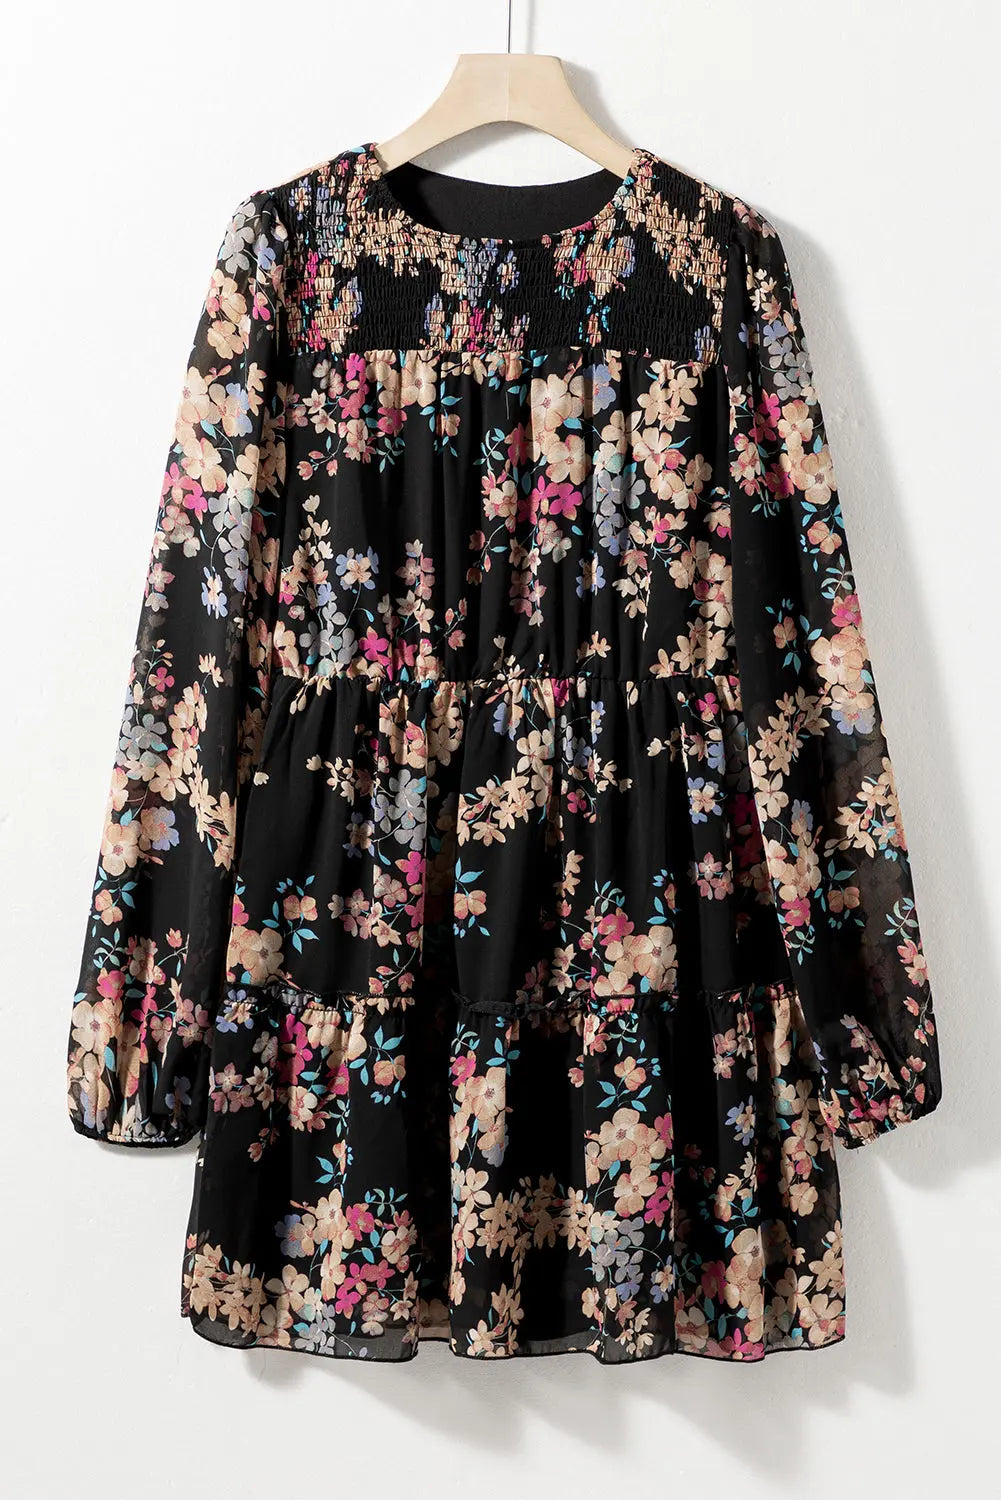 Black Floral Smocked Round Neck Ruffle Tiered Dress - Scarlett's Riverside Boutique